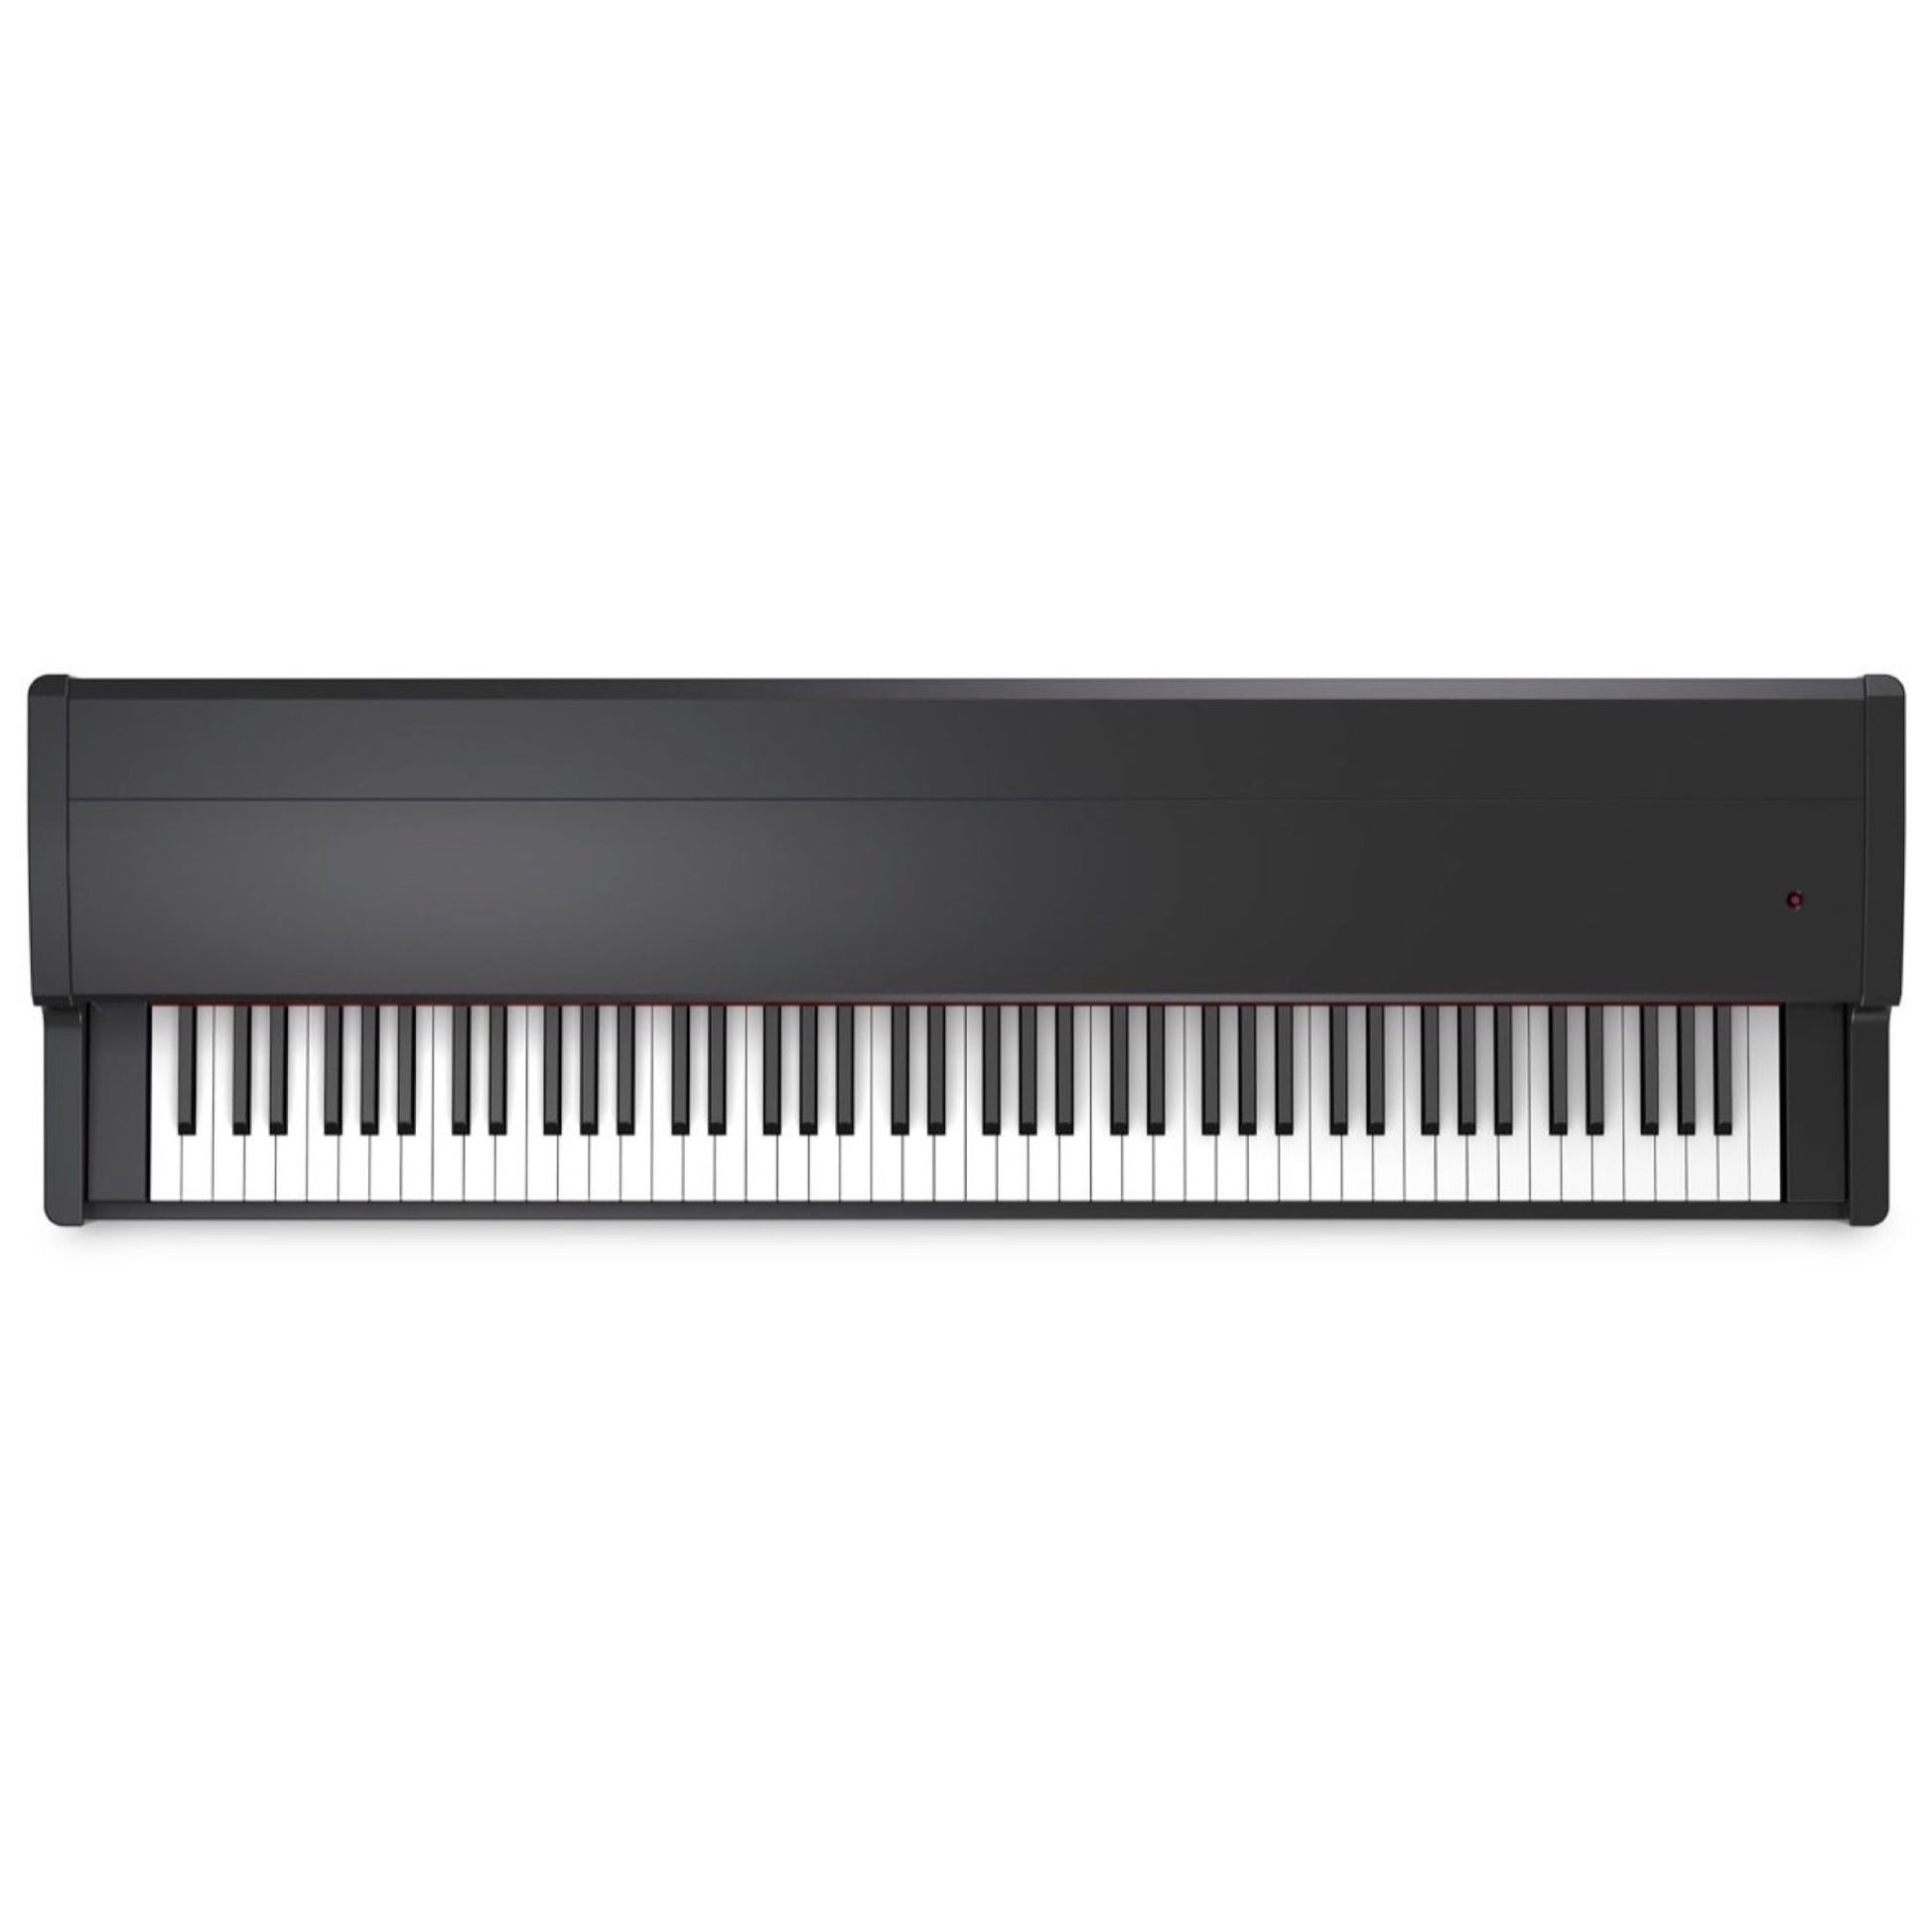 Kawai VPC1 Virtual Piano Controller Keyboard, 88-Key